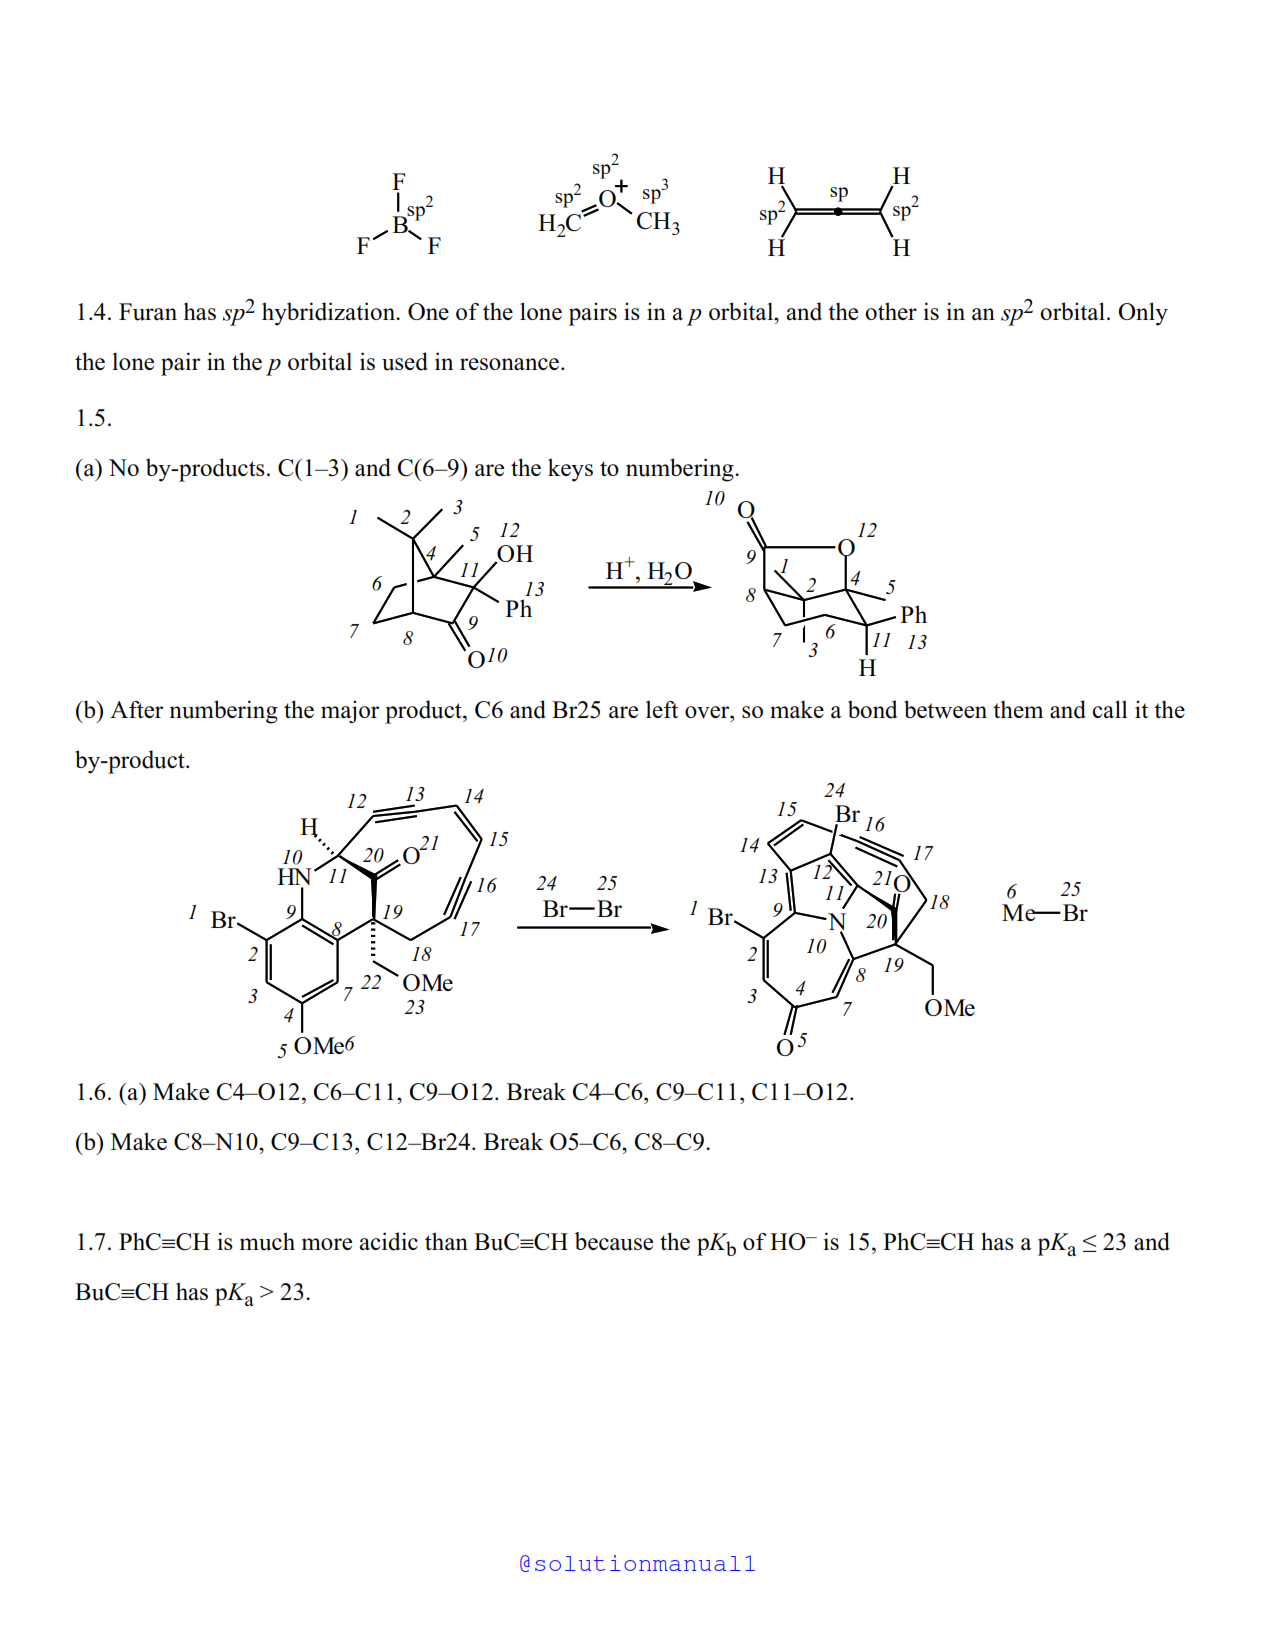 the art of writing reasonable organic reaction mechanisms 3rd edition by Robert B. Grossman solution manual | answer key